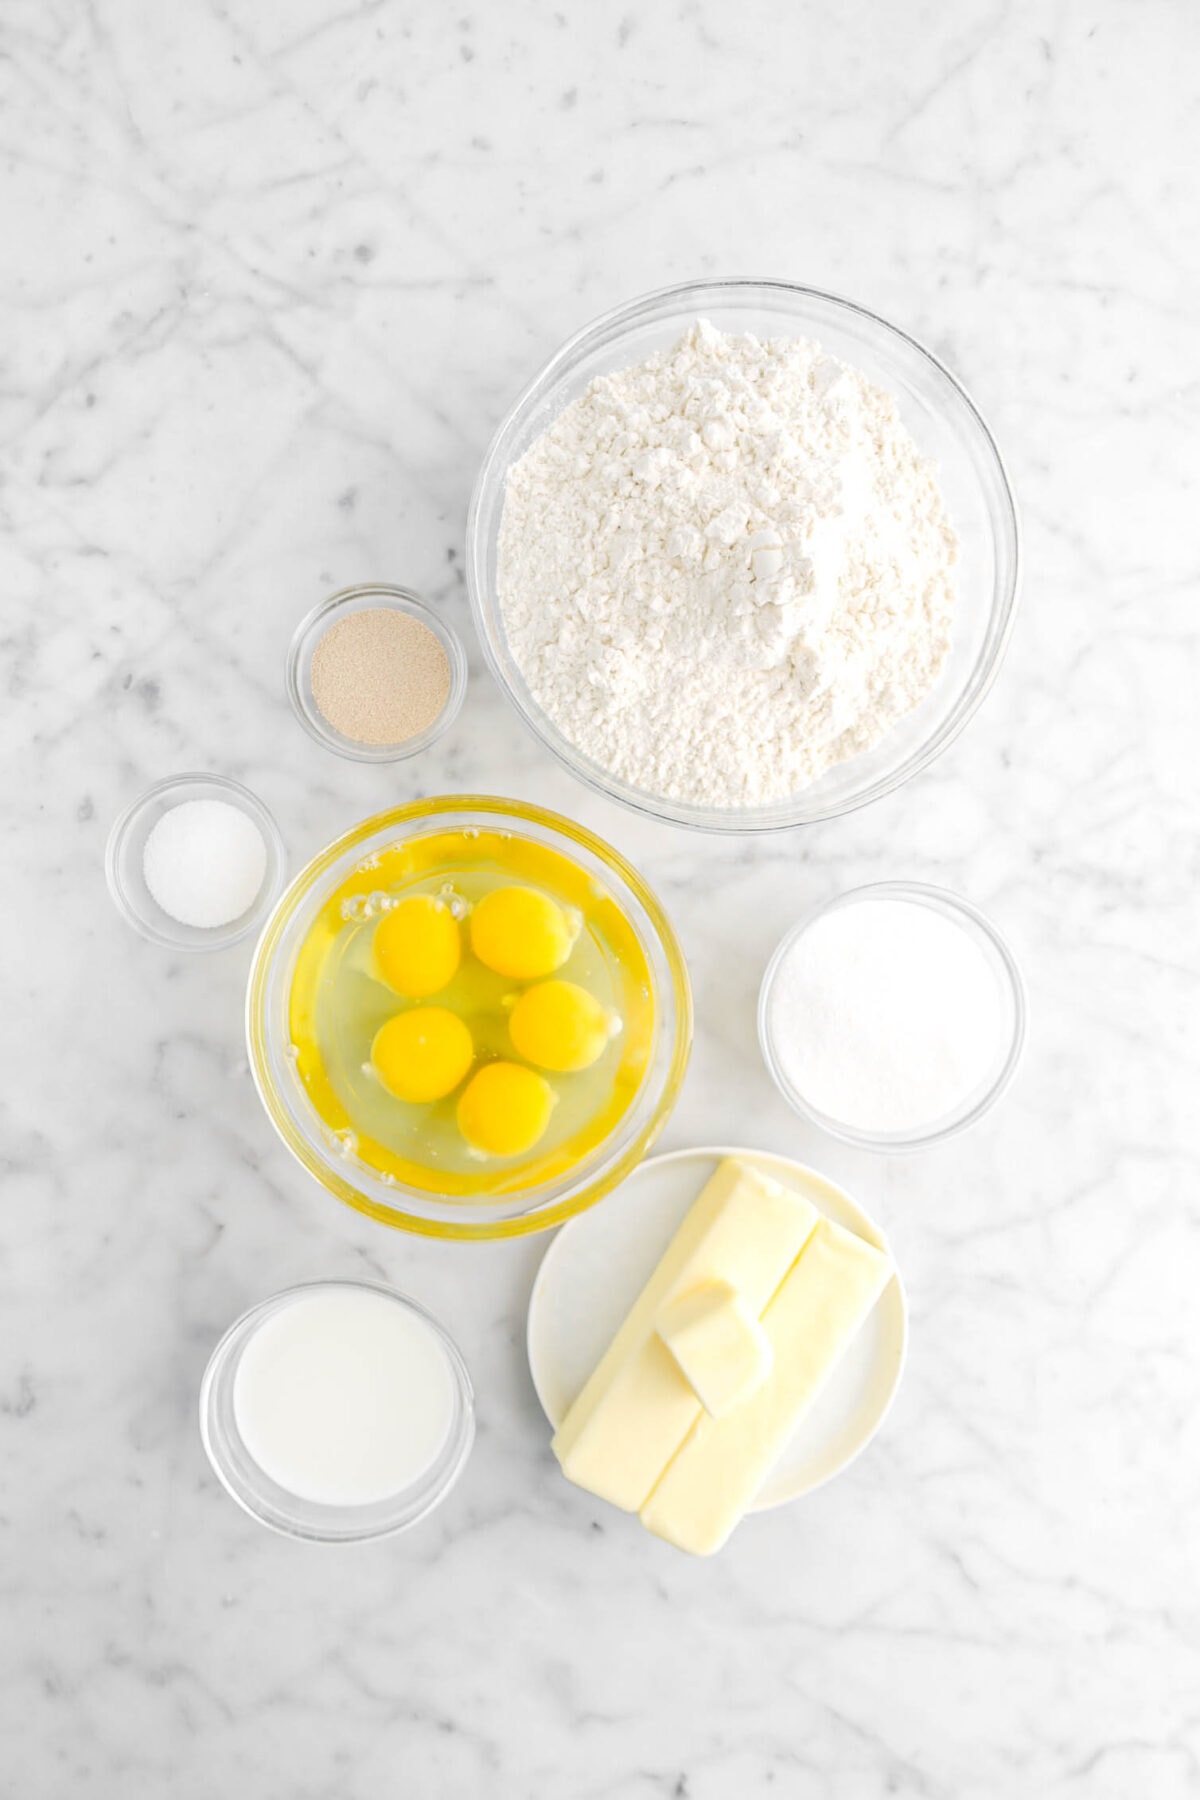 flour, yeast, salt, eggs, butter sugar, and milk on marble surface